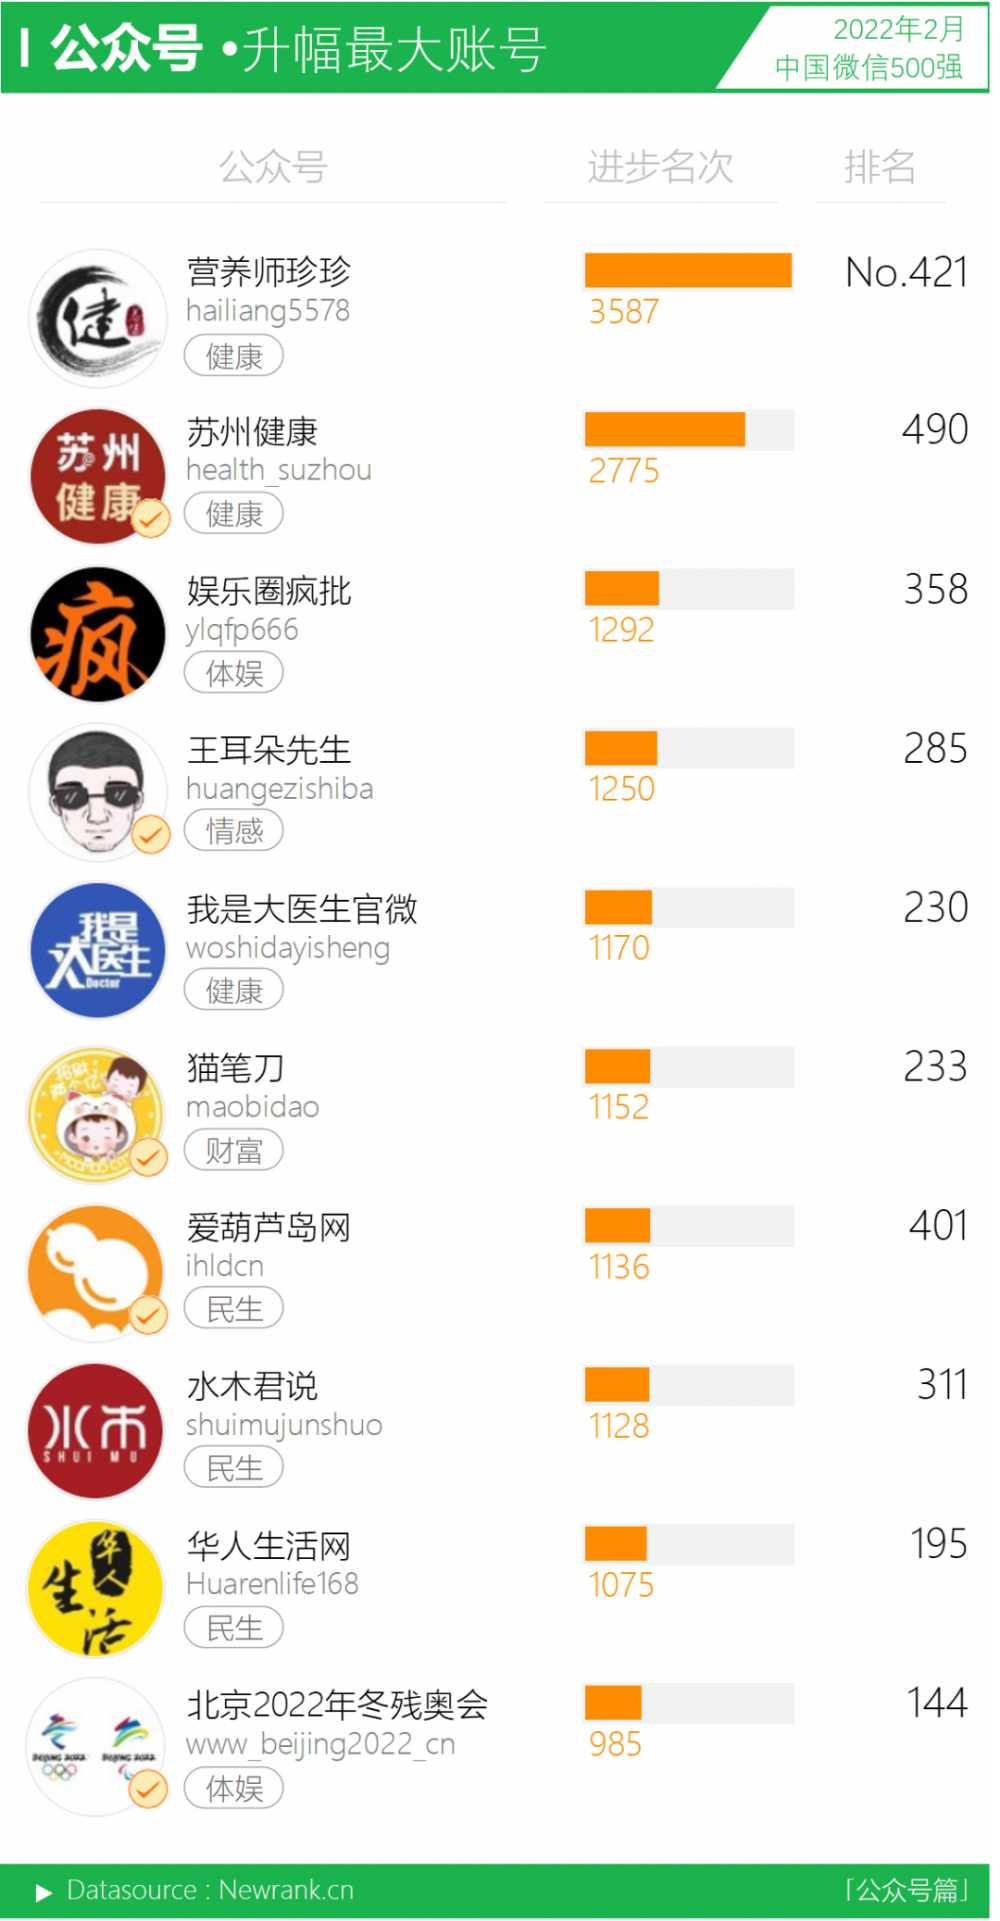 <a href='https://www.zhouxiaohui.cn
' target='_blank'><a href='https://www.zhouxiaohui.cn/duanshipin/
' target='_blank'>视频号</a></a>TOP10大换员，头部竞争激烈； | 中国微信500强月报（2022.02）-第11张图片-周小辉博客